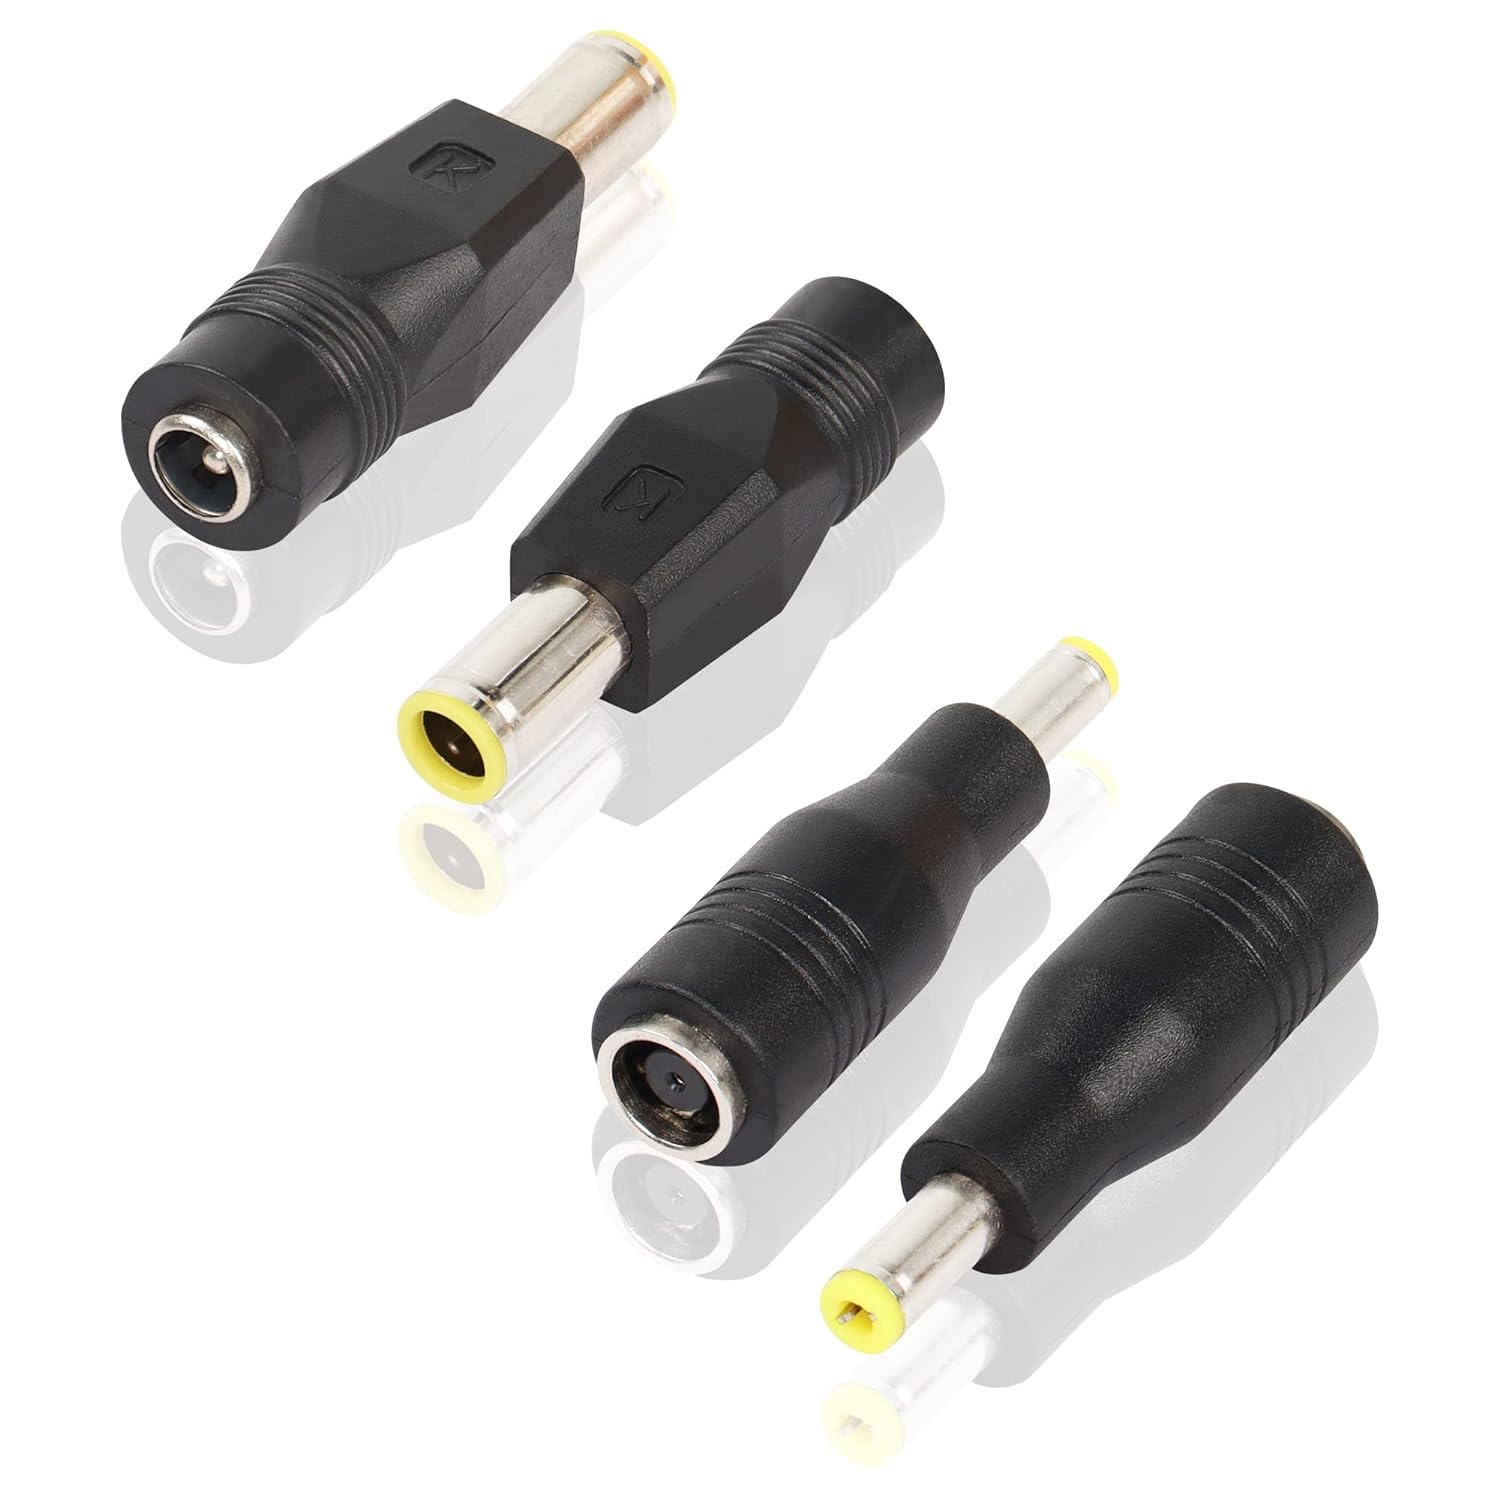 thinkstar Dc Power Plug Adapter,2Pcs Dc 8Mm Male To Dc 5.5Mm X 2.1Mm Female And 2Pcs Dc 5.5Mm X 2.1Mm Male To Dc 8Mm Female Connectors(…